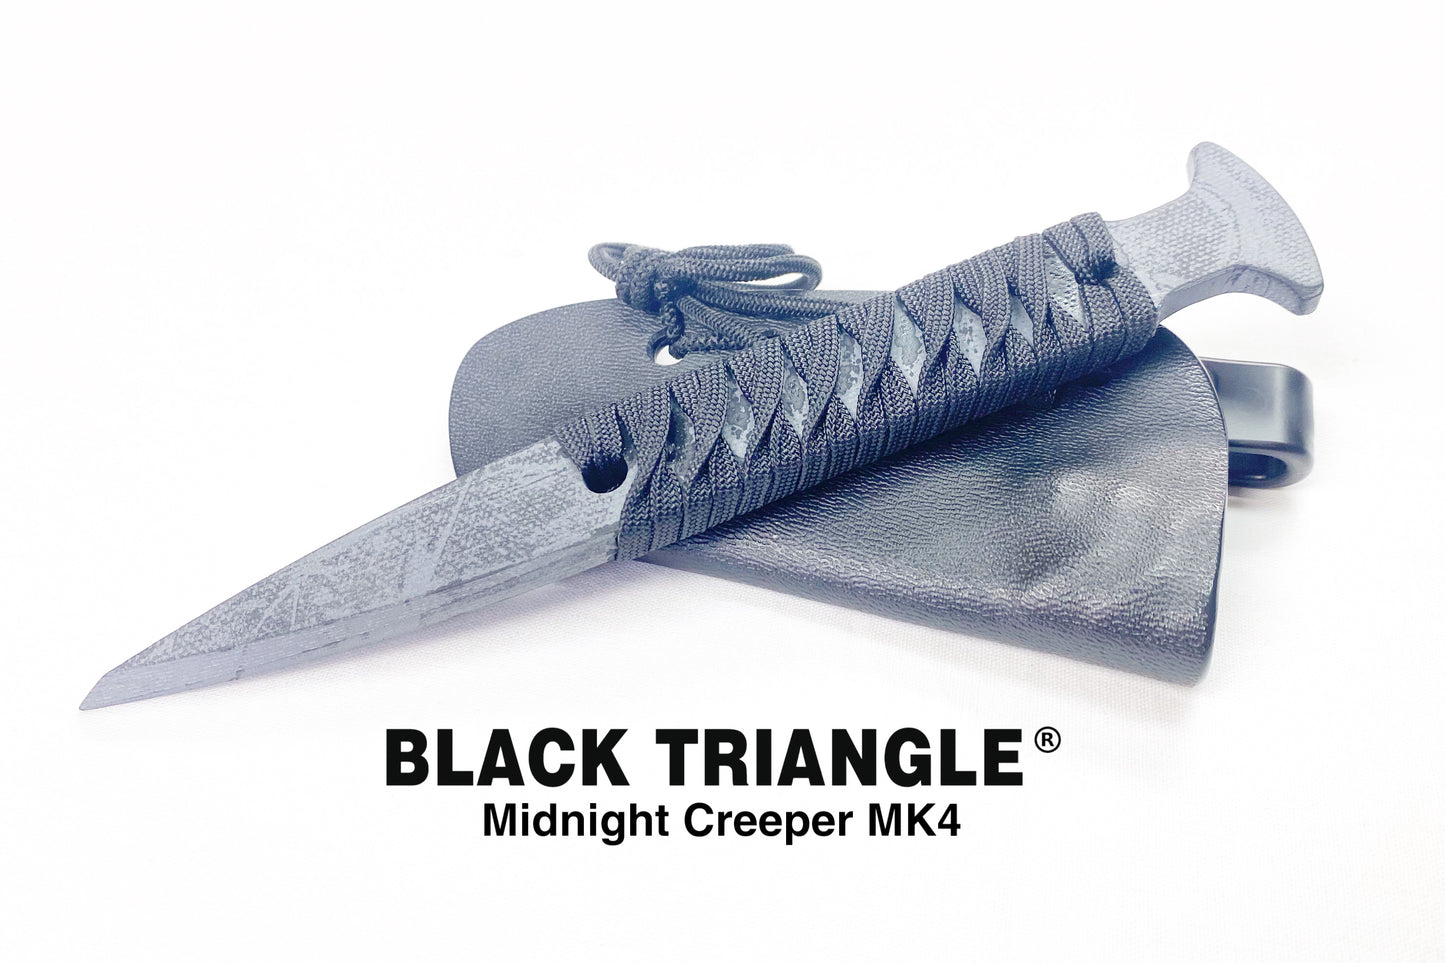 Midnight Creeper MK4: The Ultimate Non-Metallic Fighting Knife